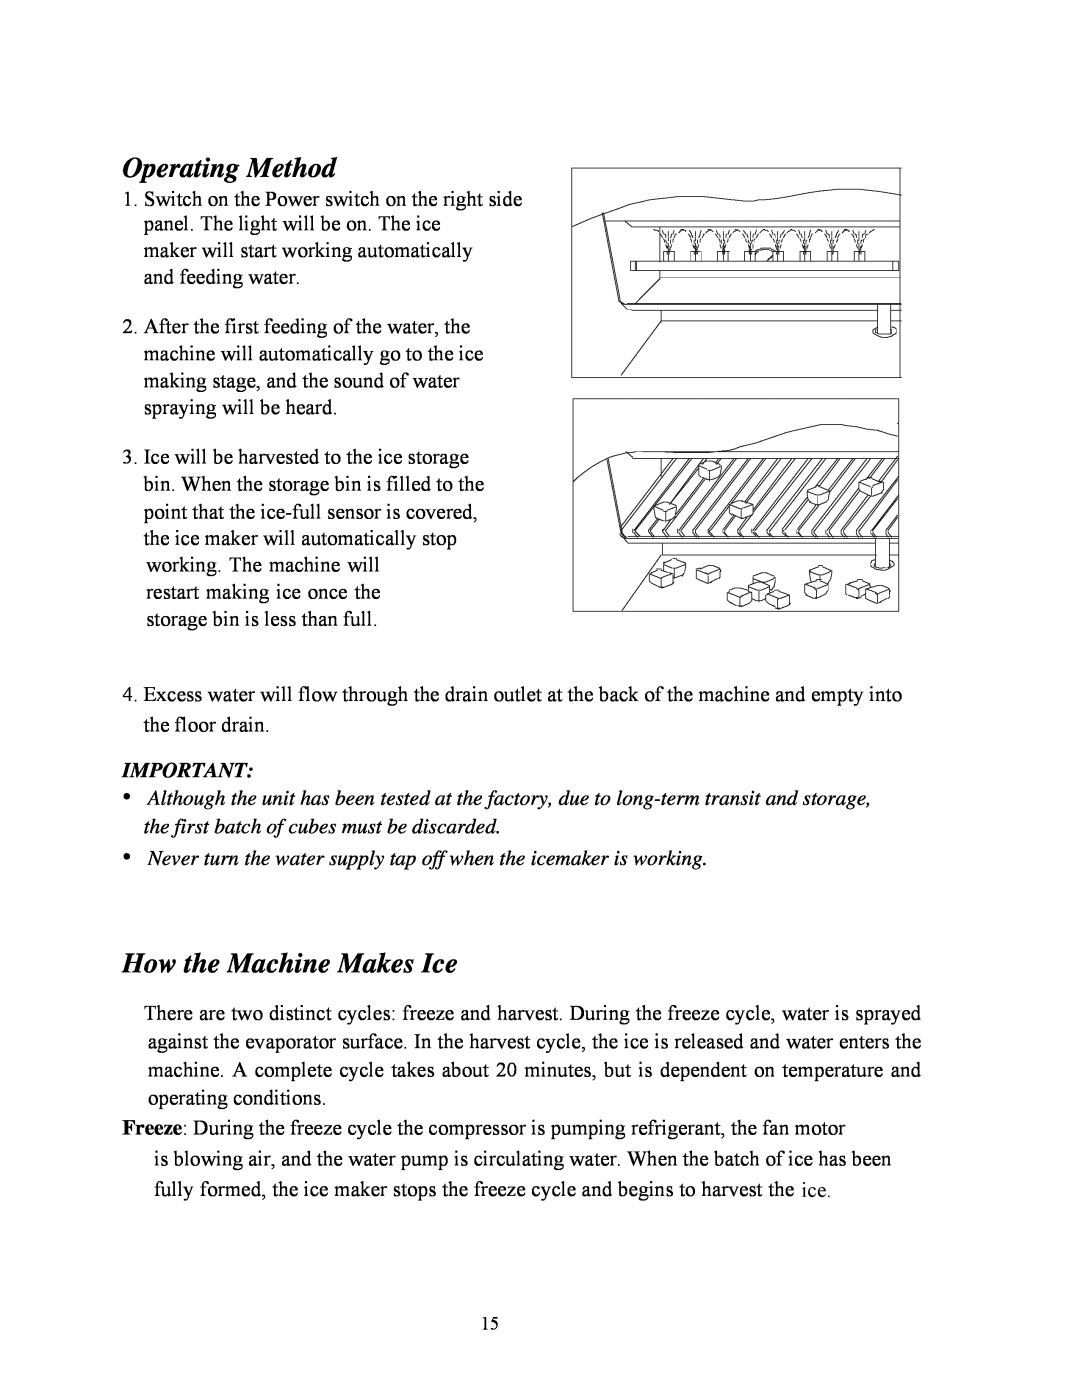 Summit BIM70 user manual Operating Method, How the Machine Makes Ice 